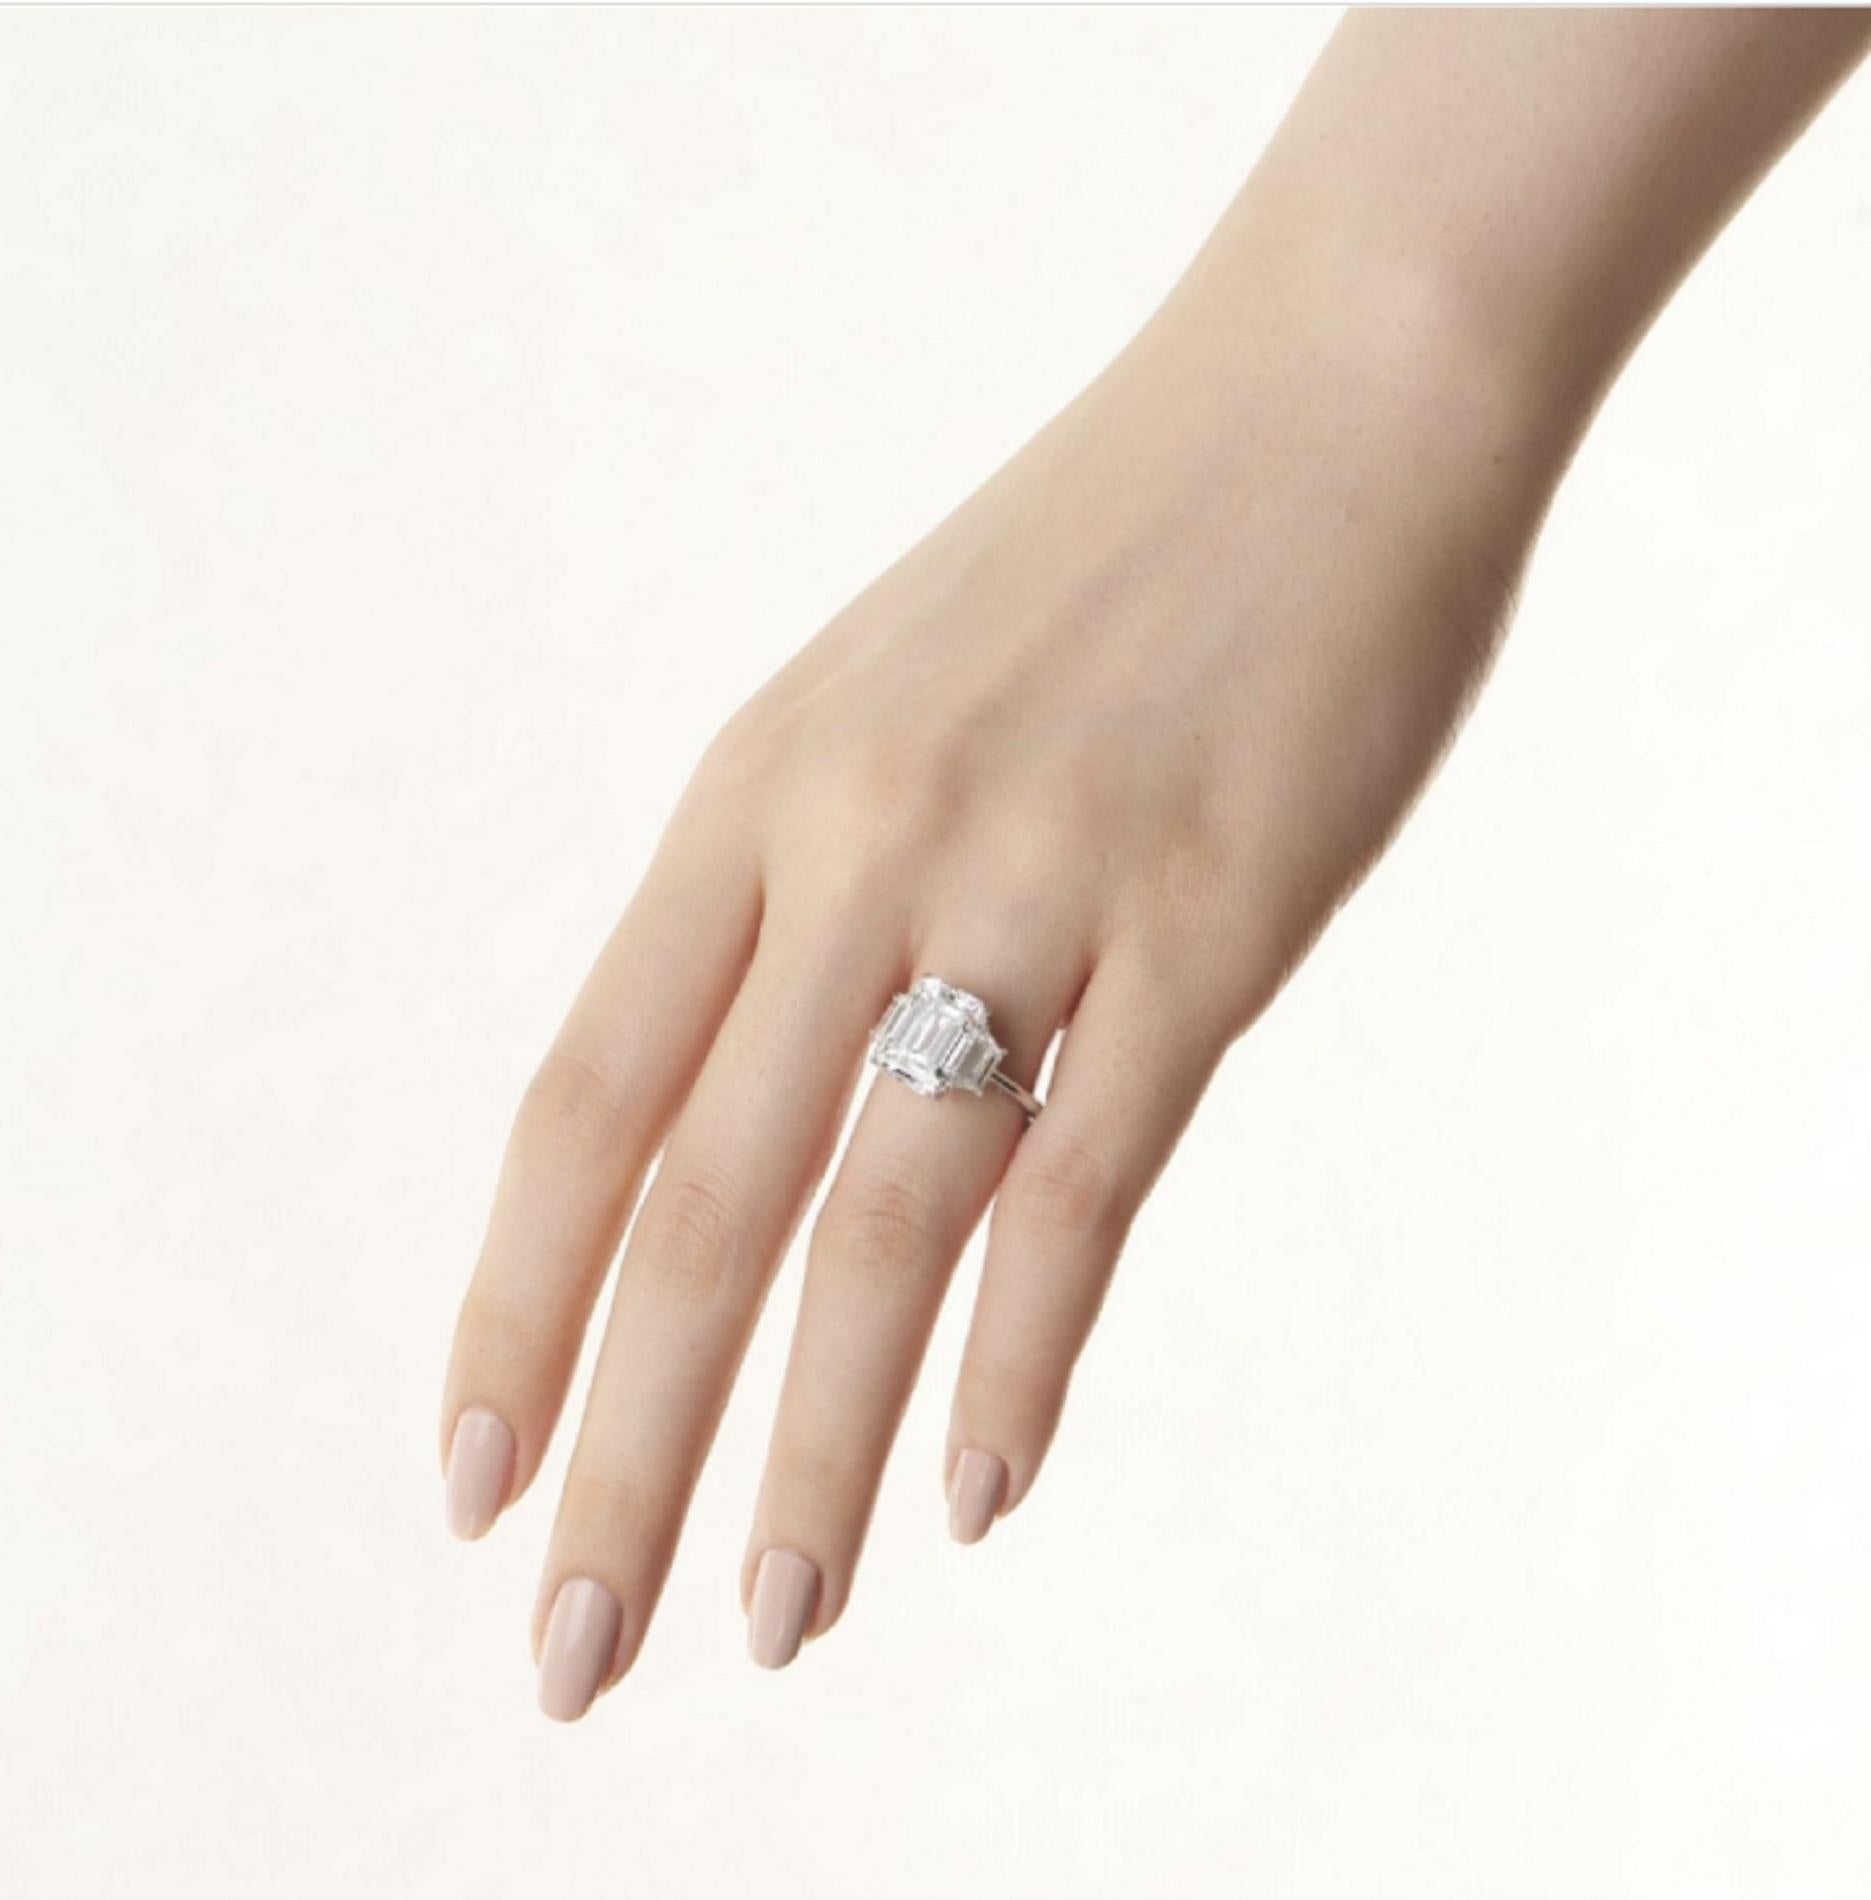 5ct emerald cut diamond ring